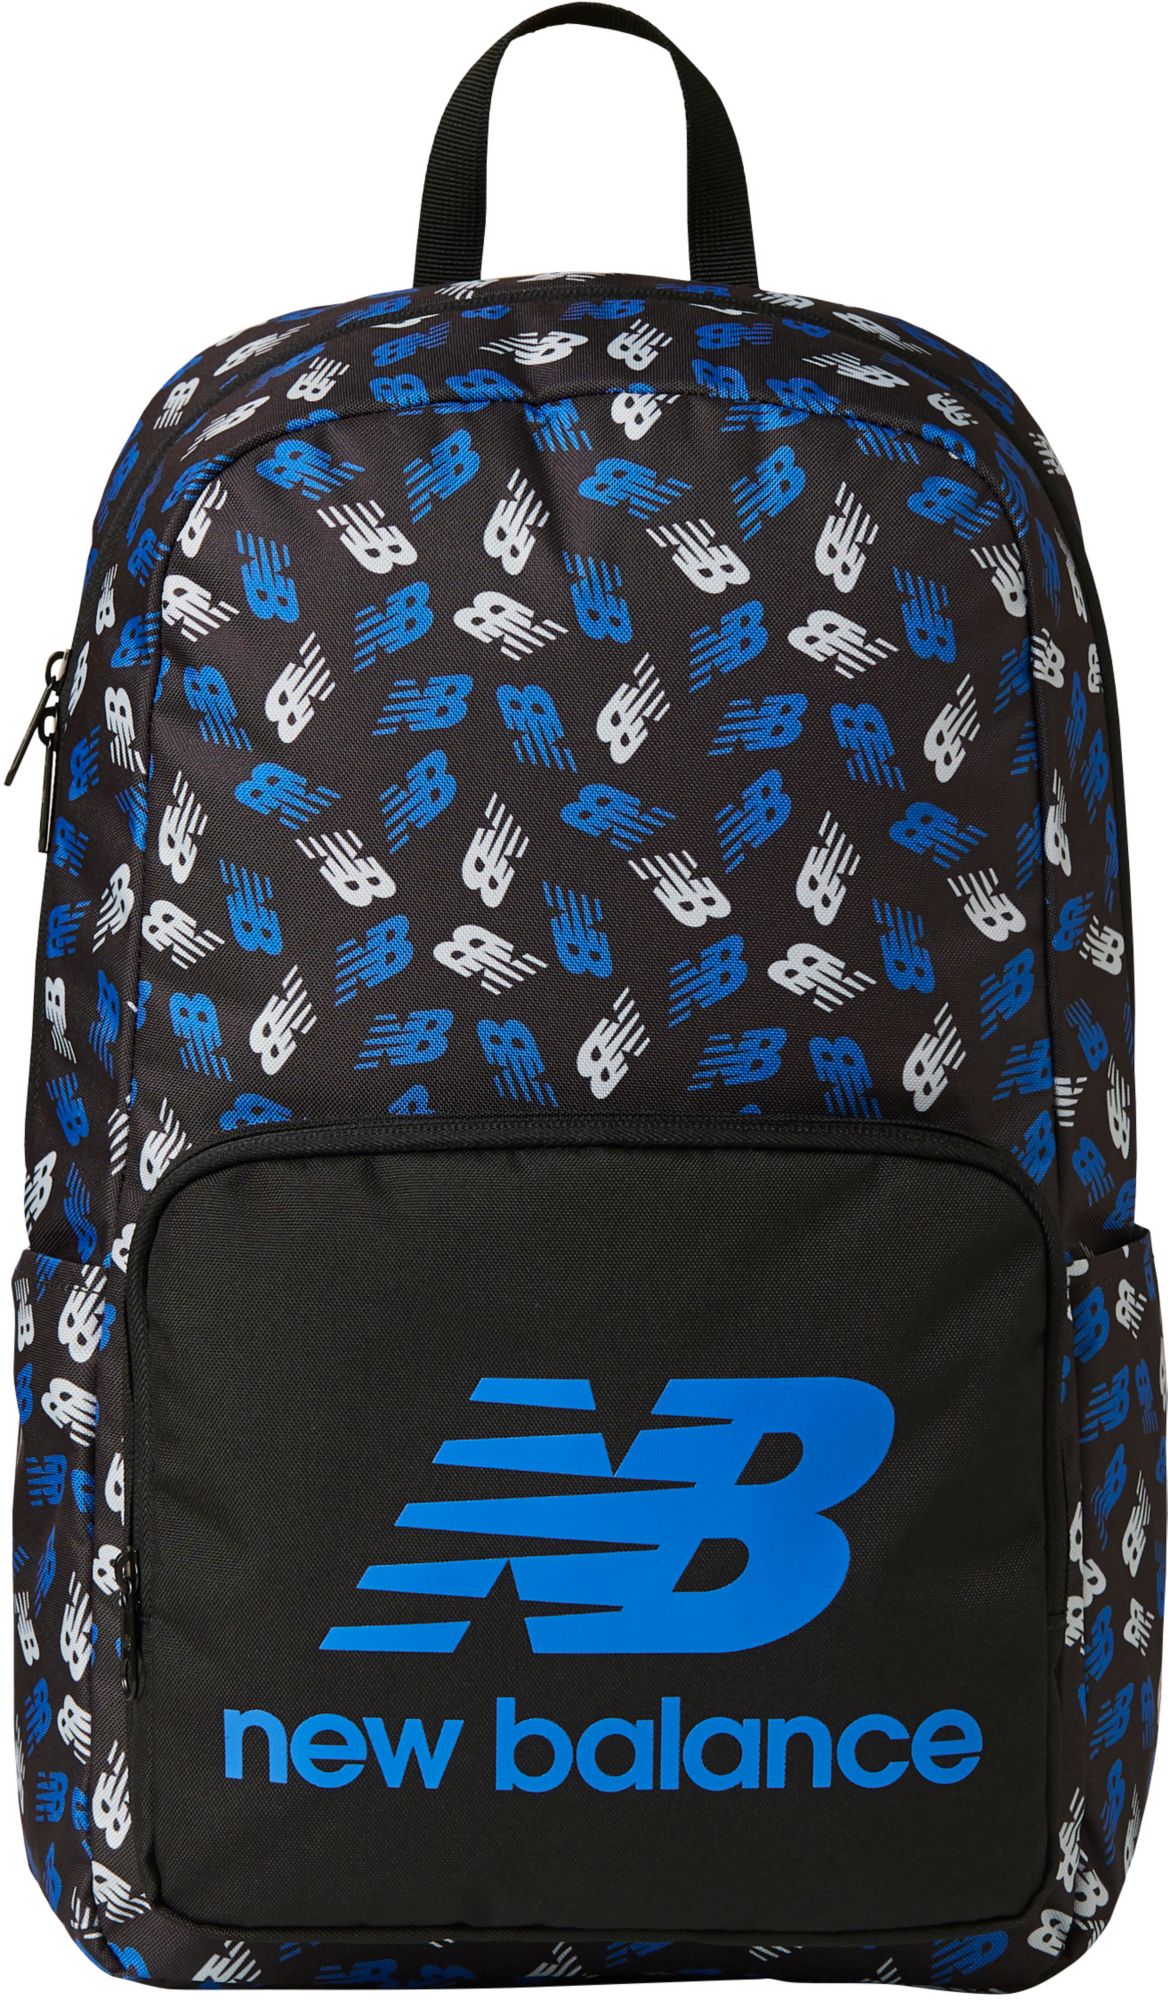 New Balance Kids' Printed Backpack